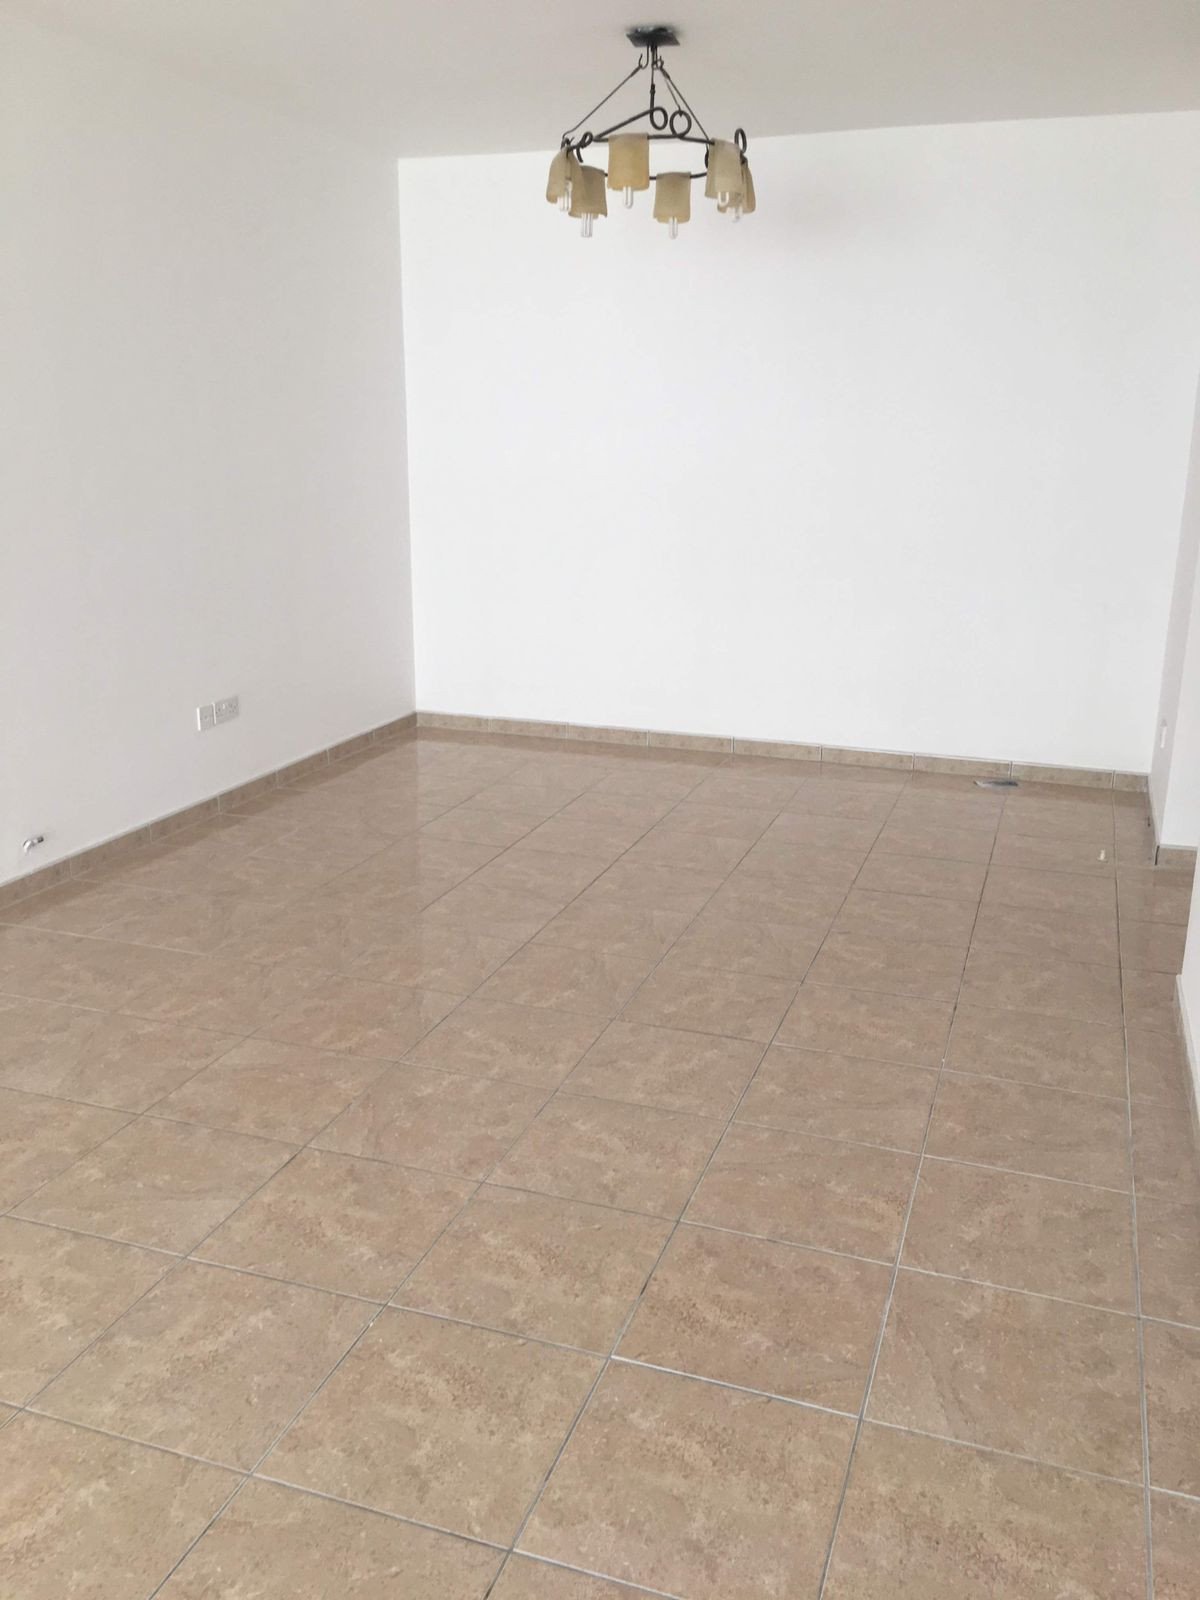 For Sale: Apartment (Flat) in Aglantzia, Nicosia for Rent | Key Realtor Cyprus